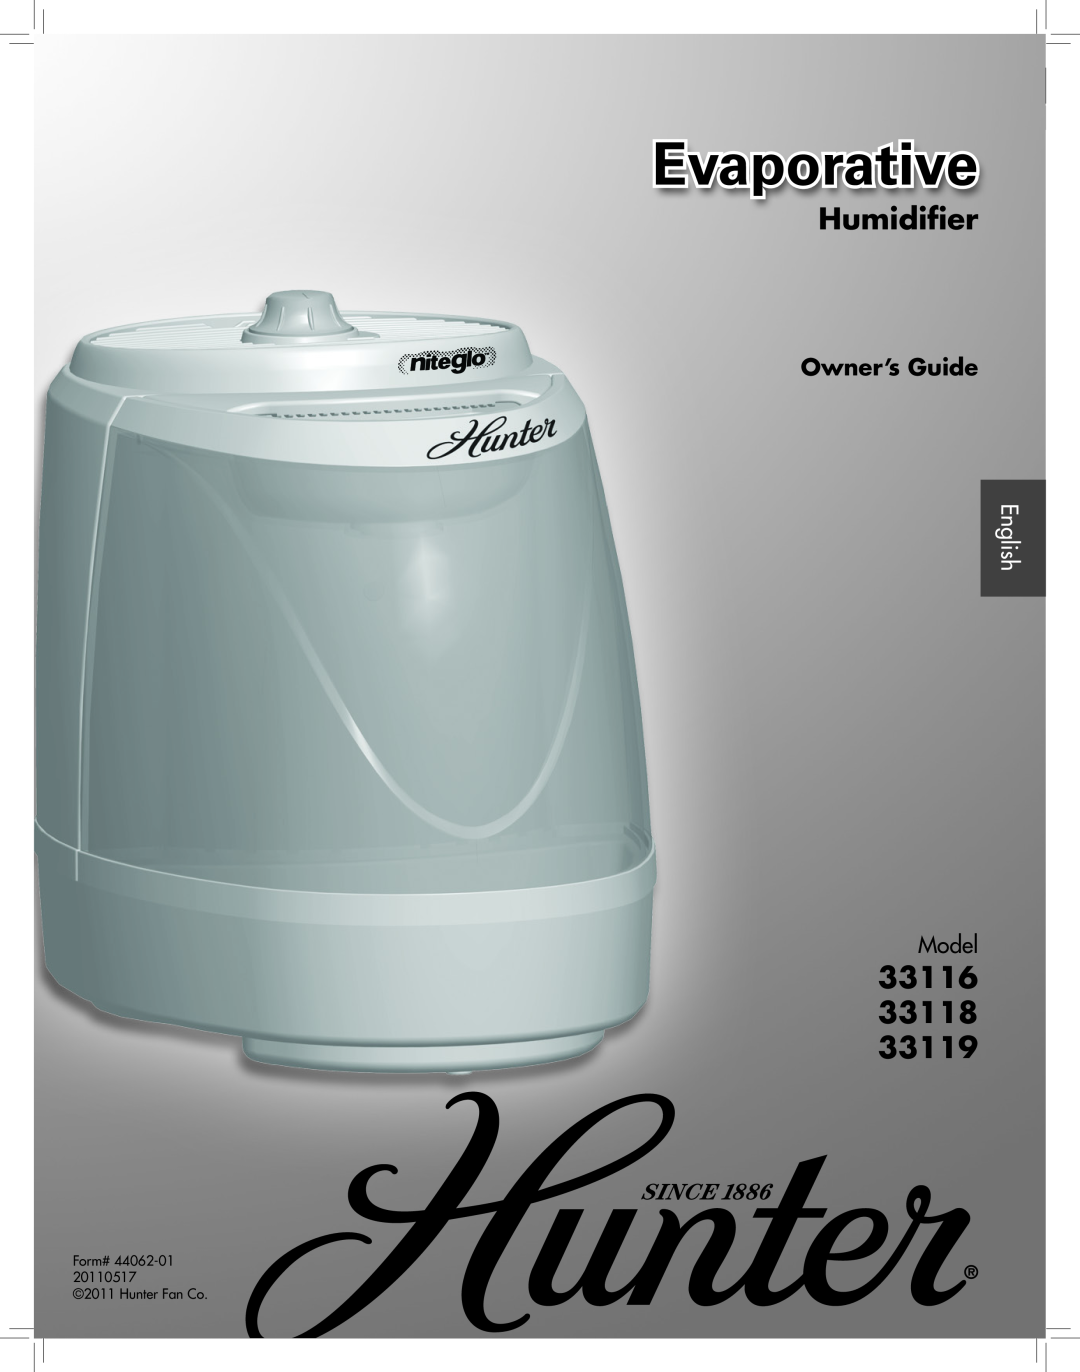 Hunter Fan 33119 manual Humidifier, 33116, Evaporative, Owner’s Guide, English, Model, Form# 2011 Hunter Fan Co 